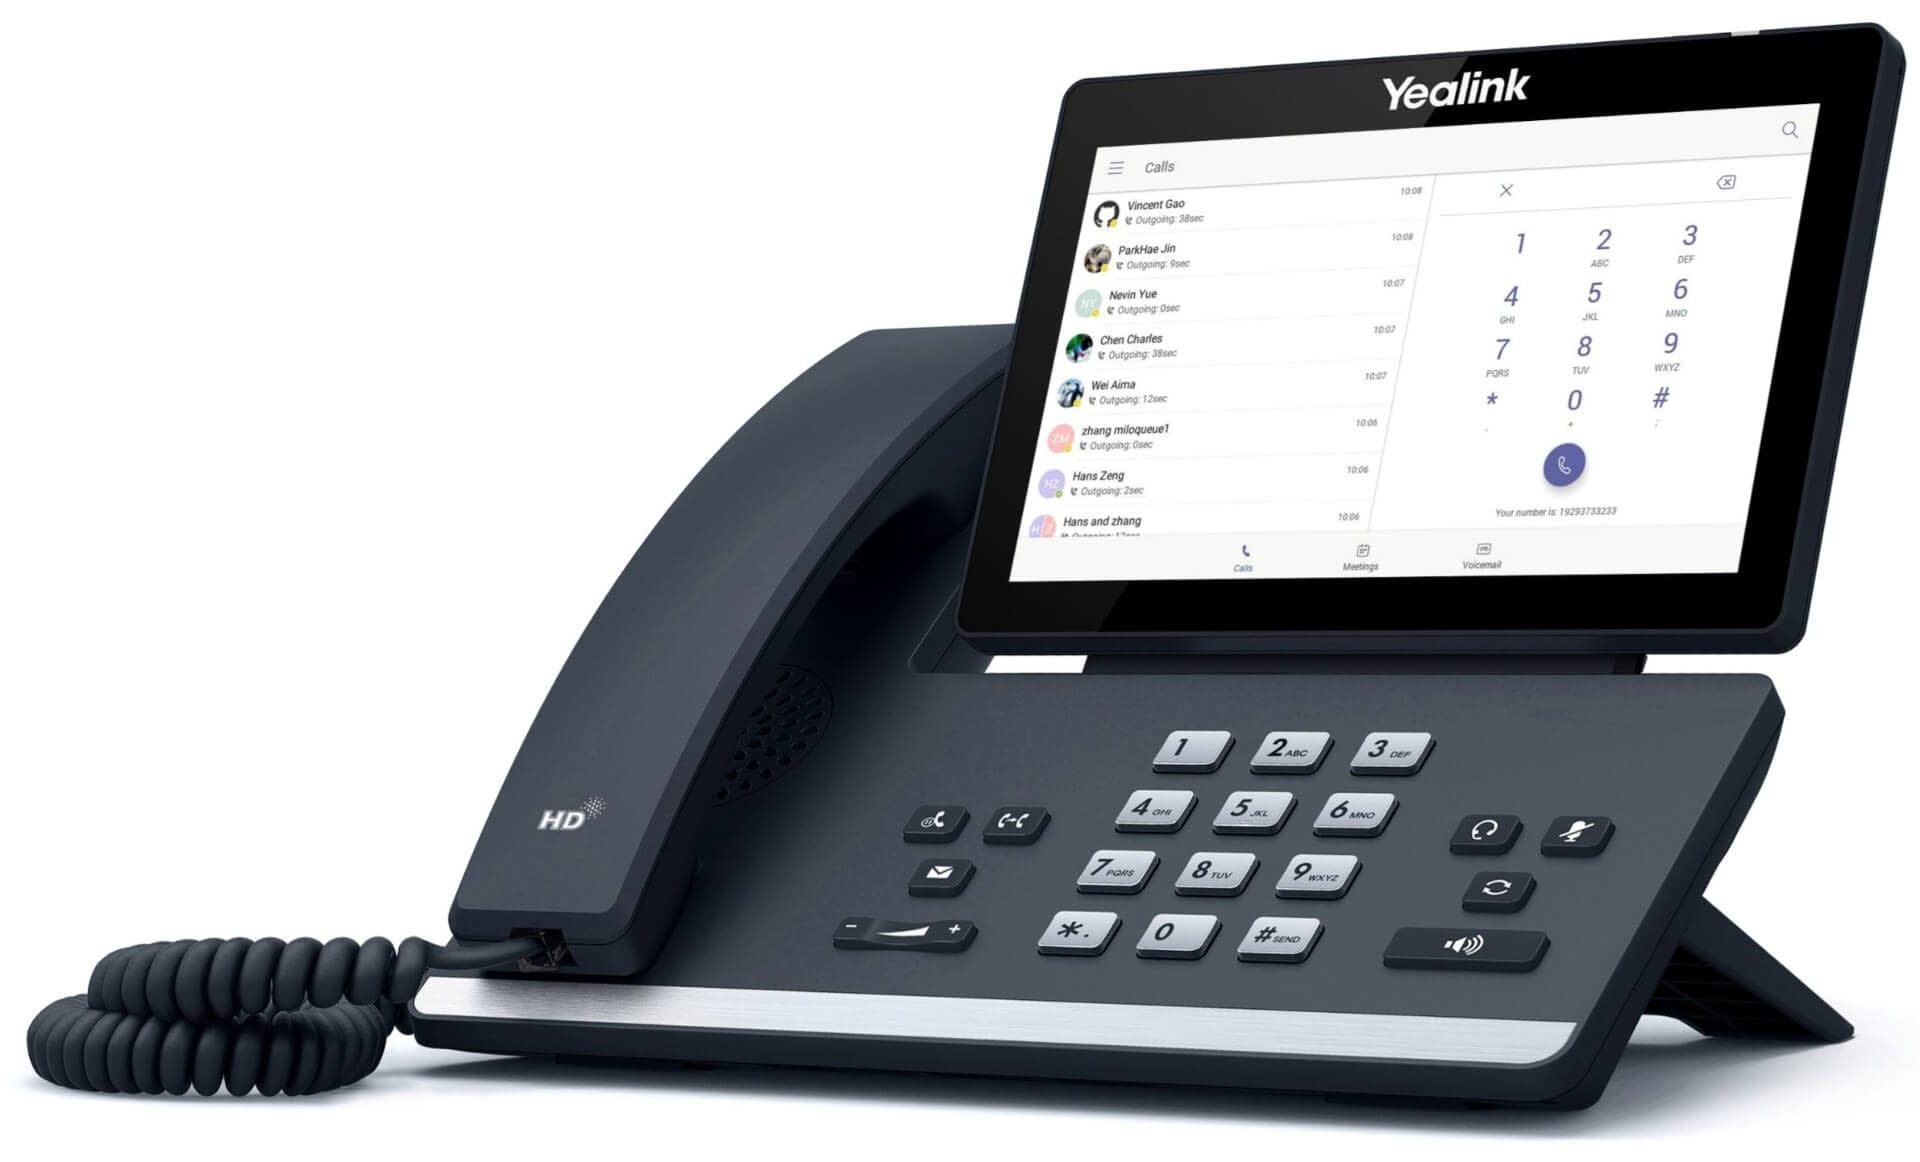 Yealink T56 Business IP Phone Image